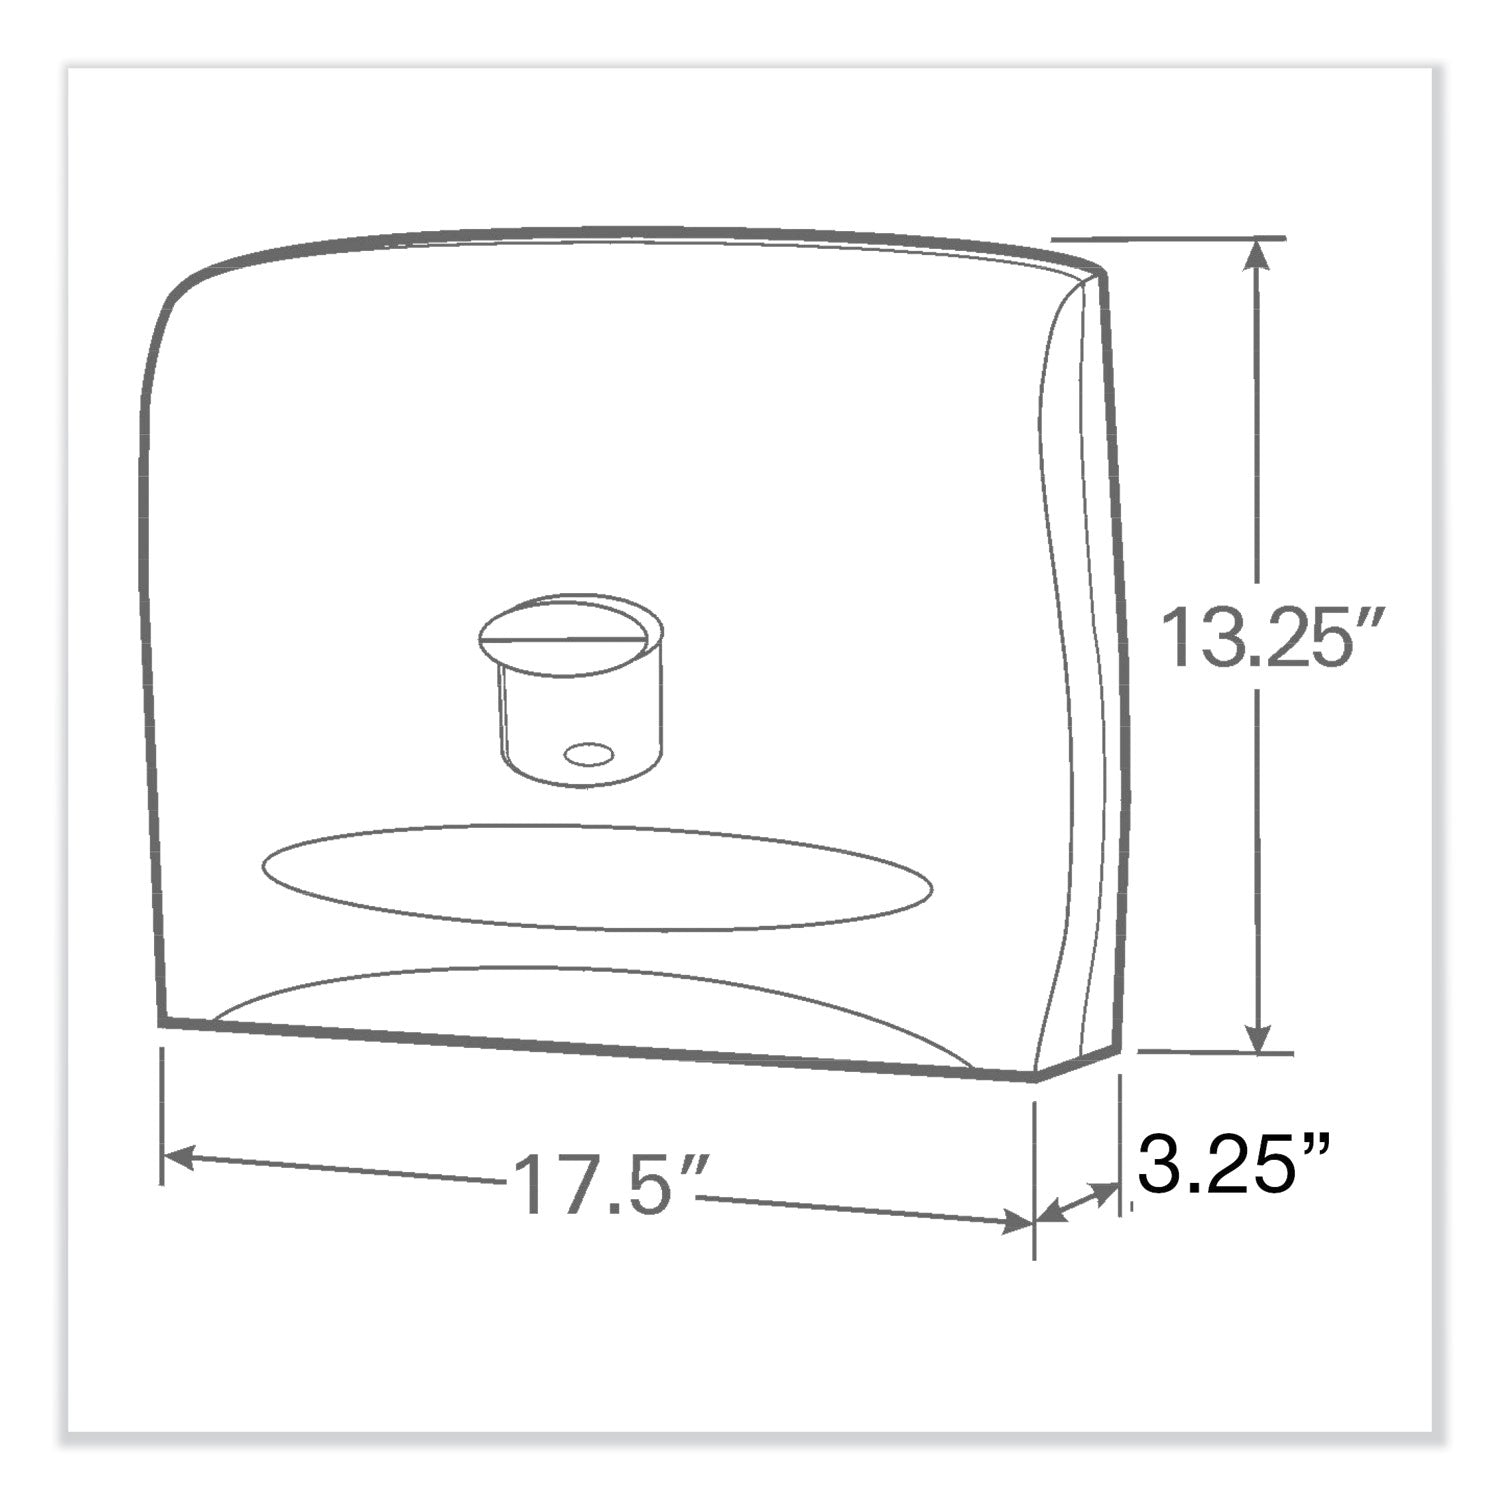 Personal Seat Cover Dispenser, 17.5 x 2.25 x 13.25, White - 